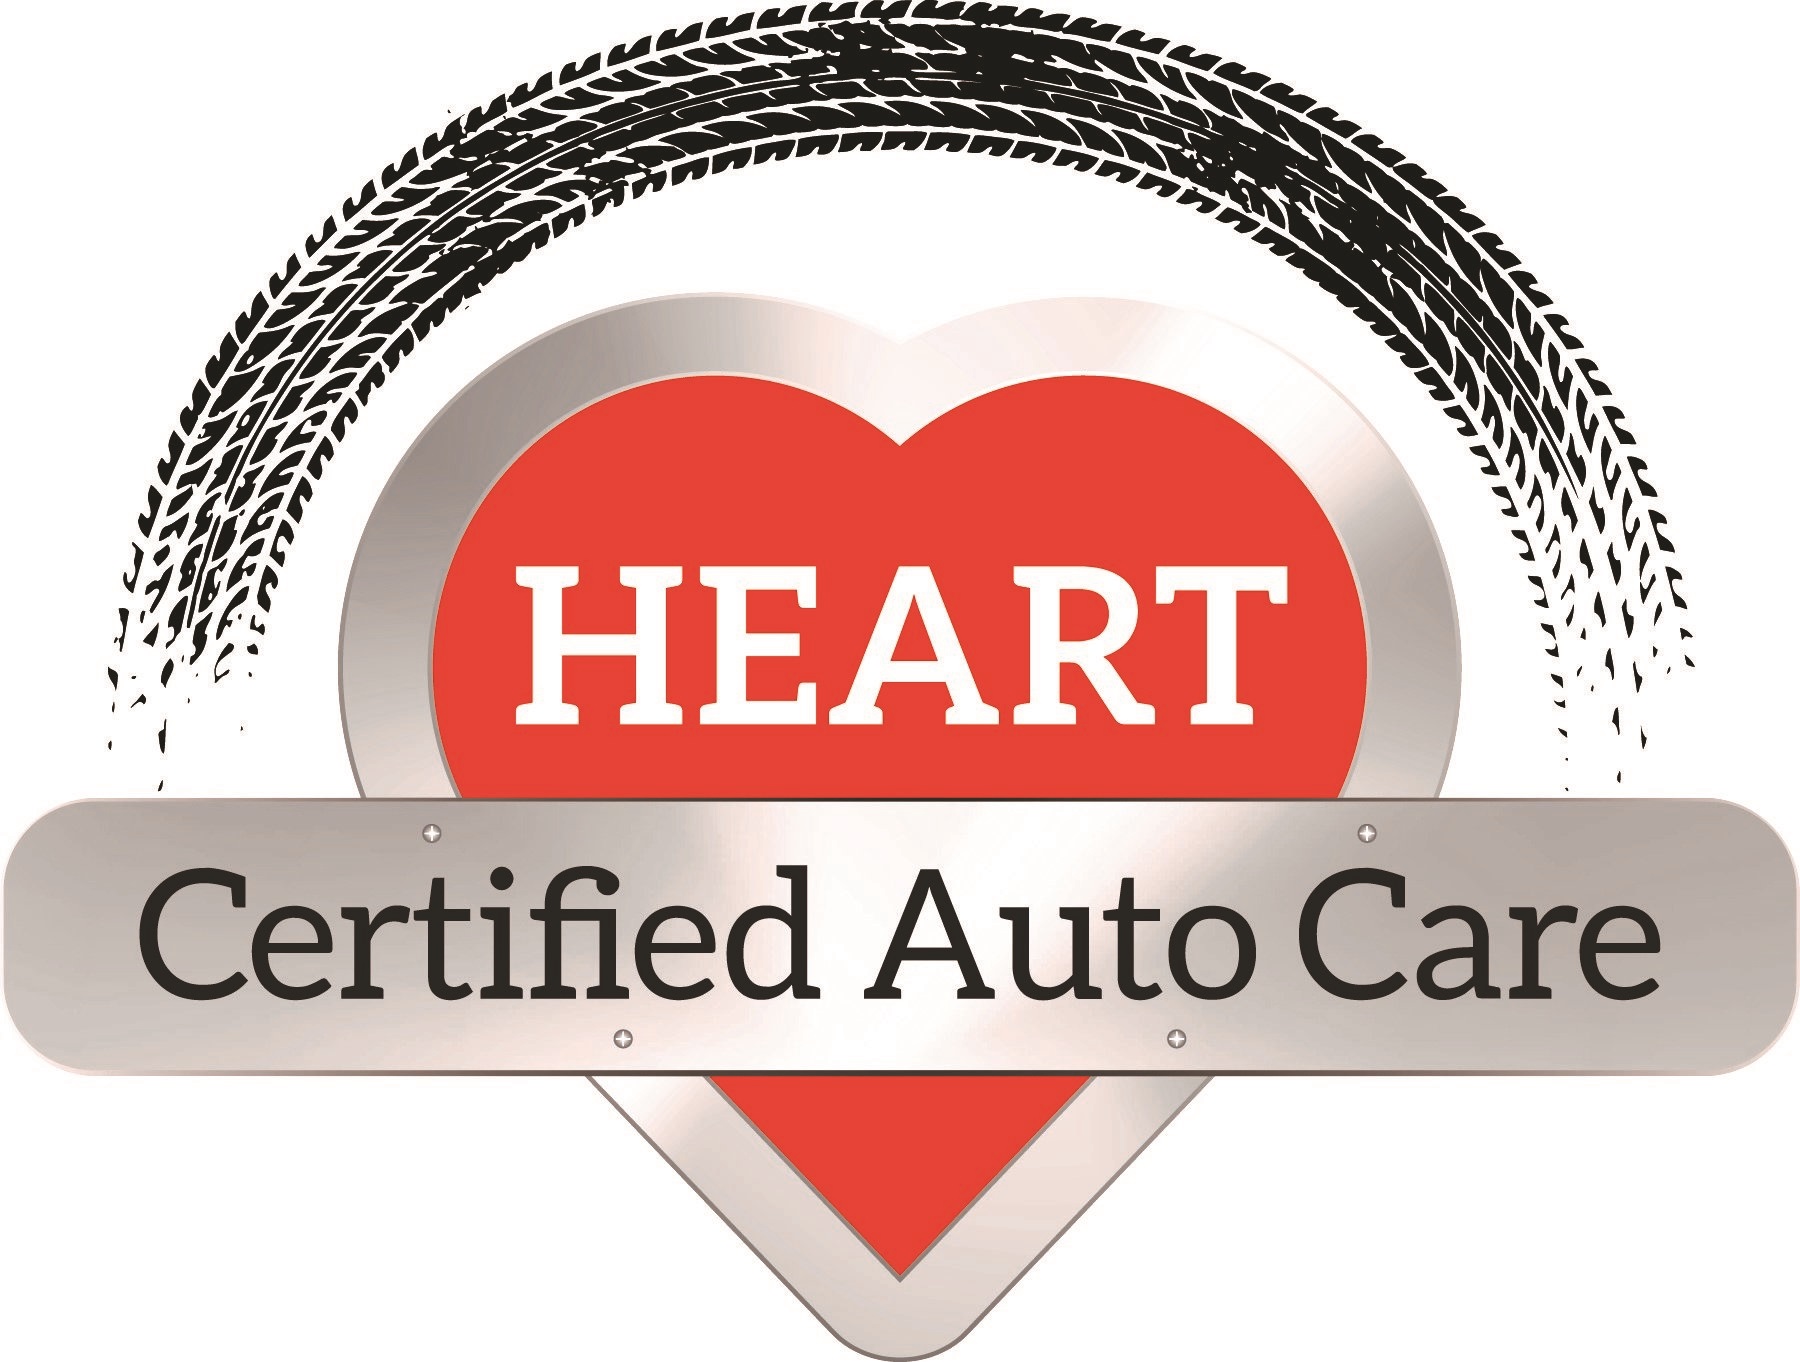 Heart Certified Auto Care logo